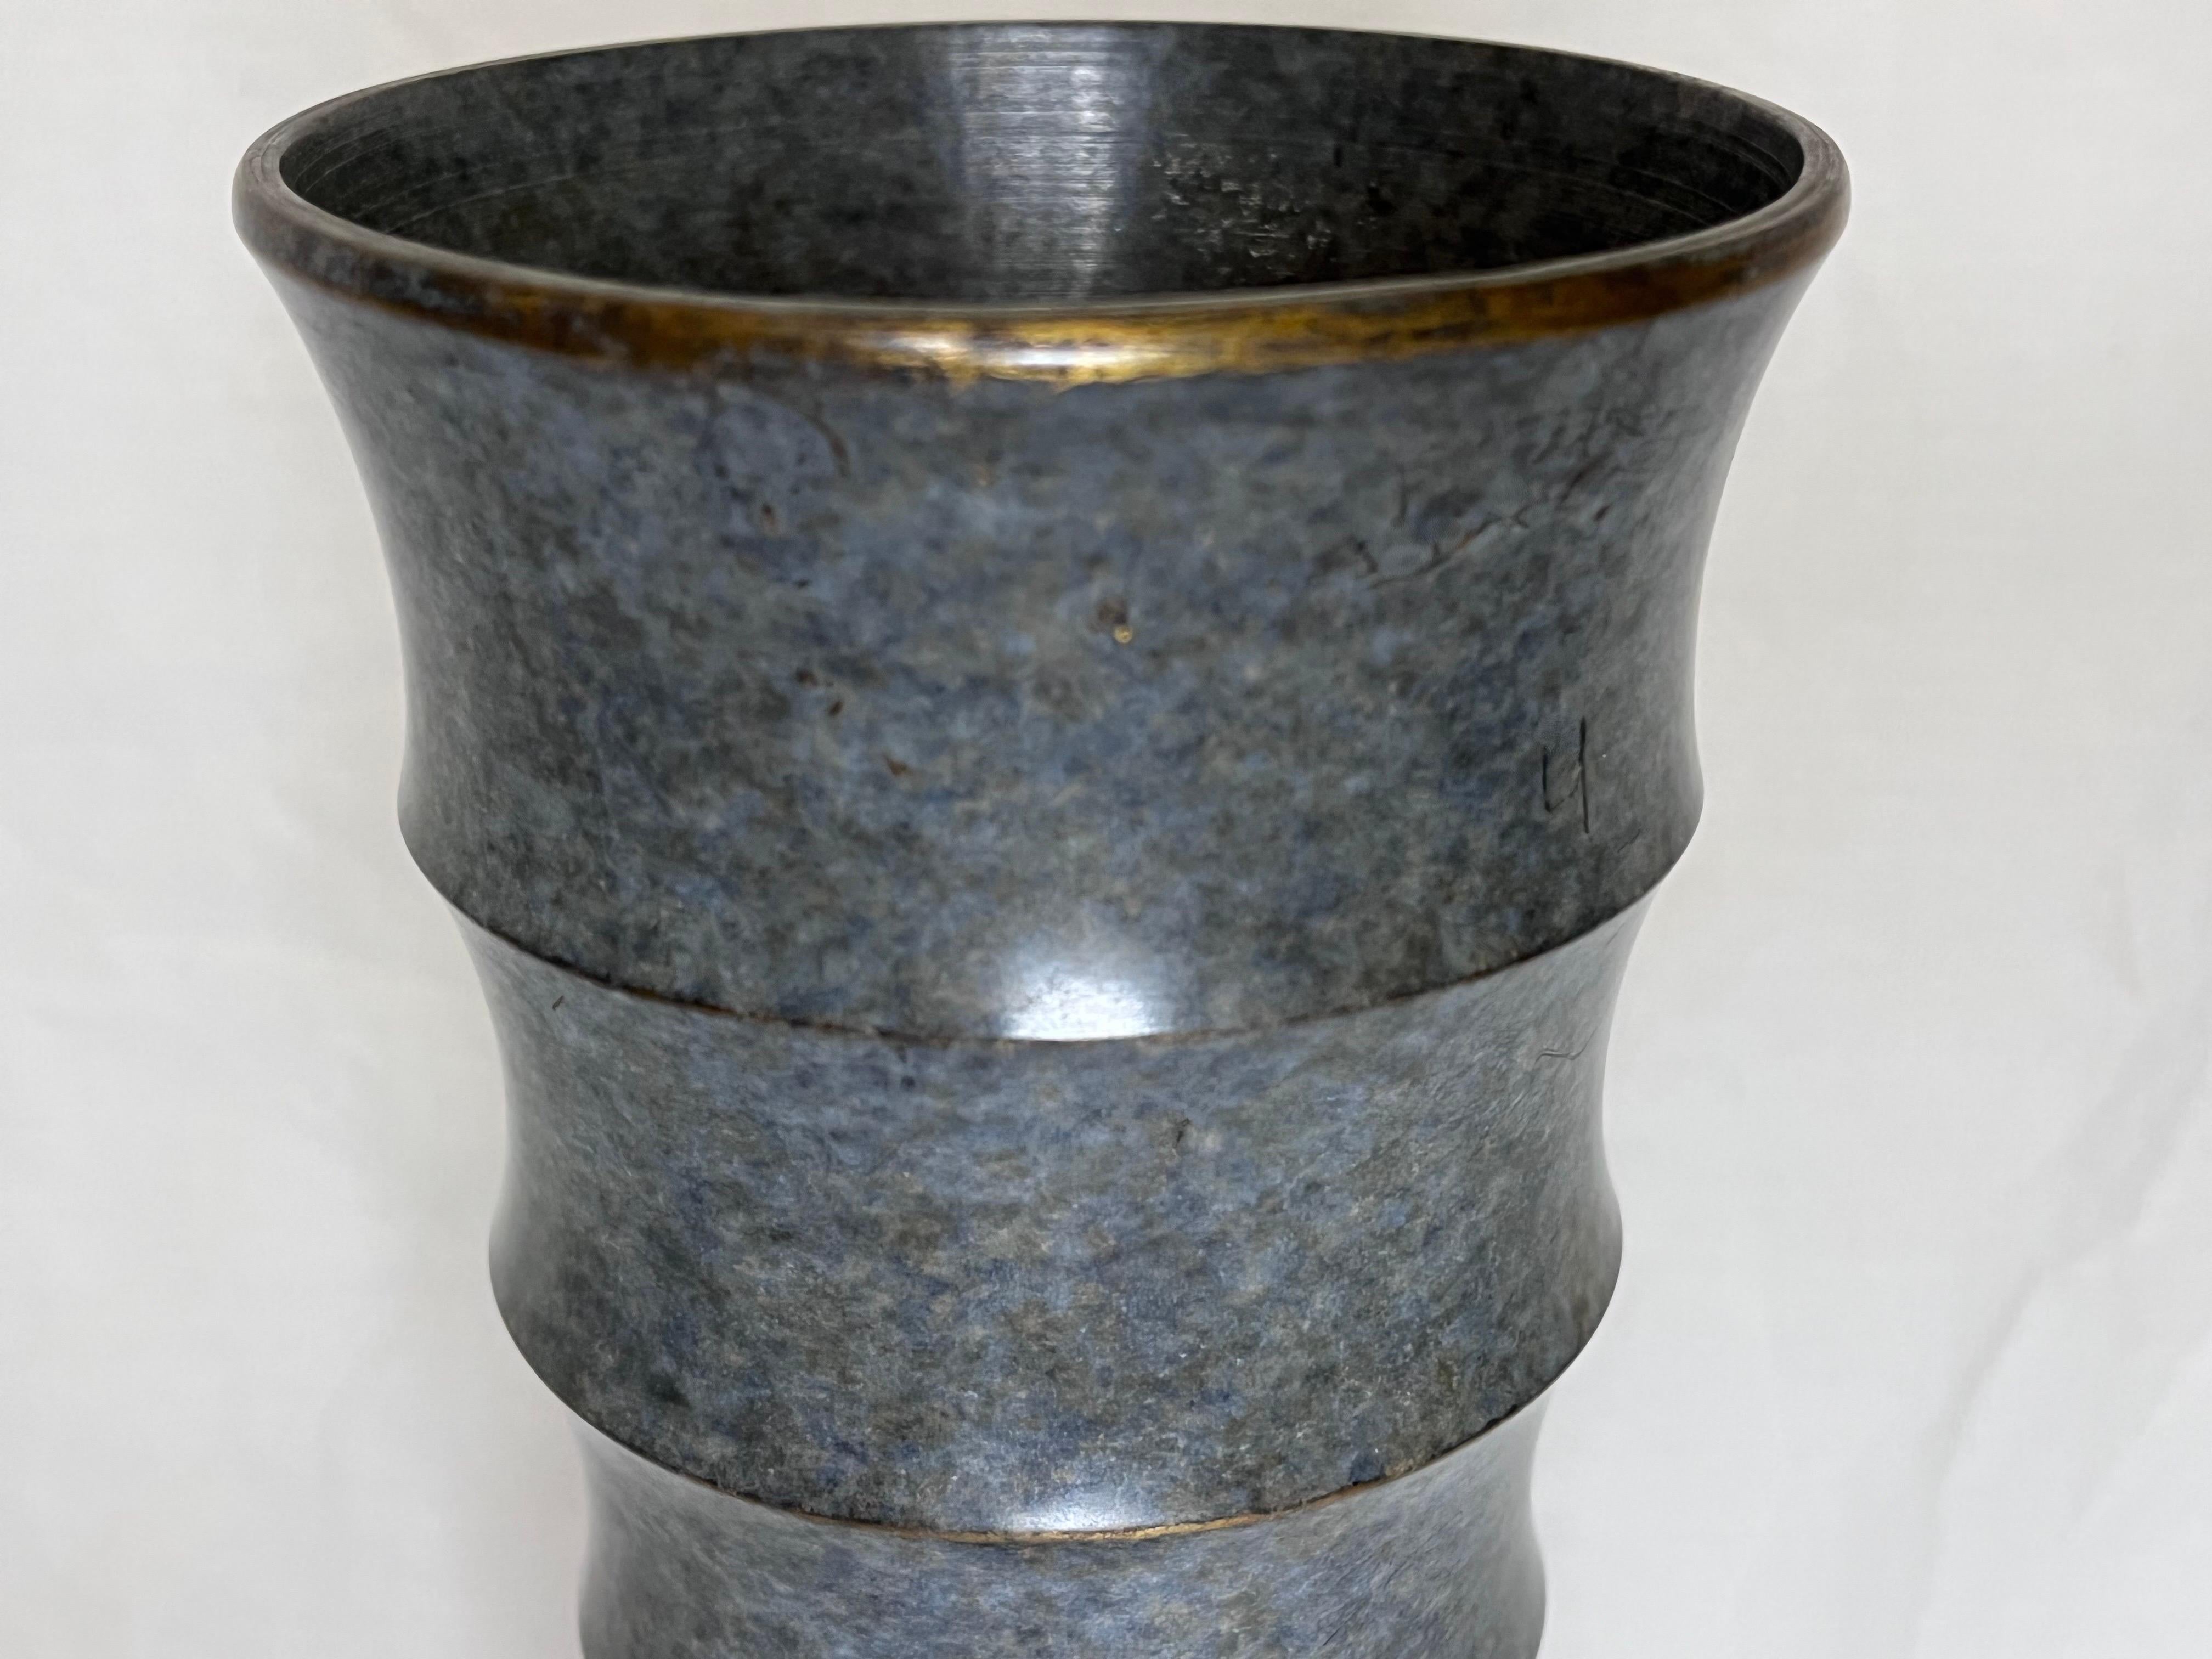 American Vintage Bronze Vase Brancusi Inspired Organic Modern Architectural Detail Finish For Sale